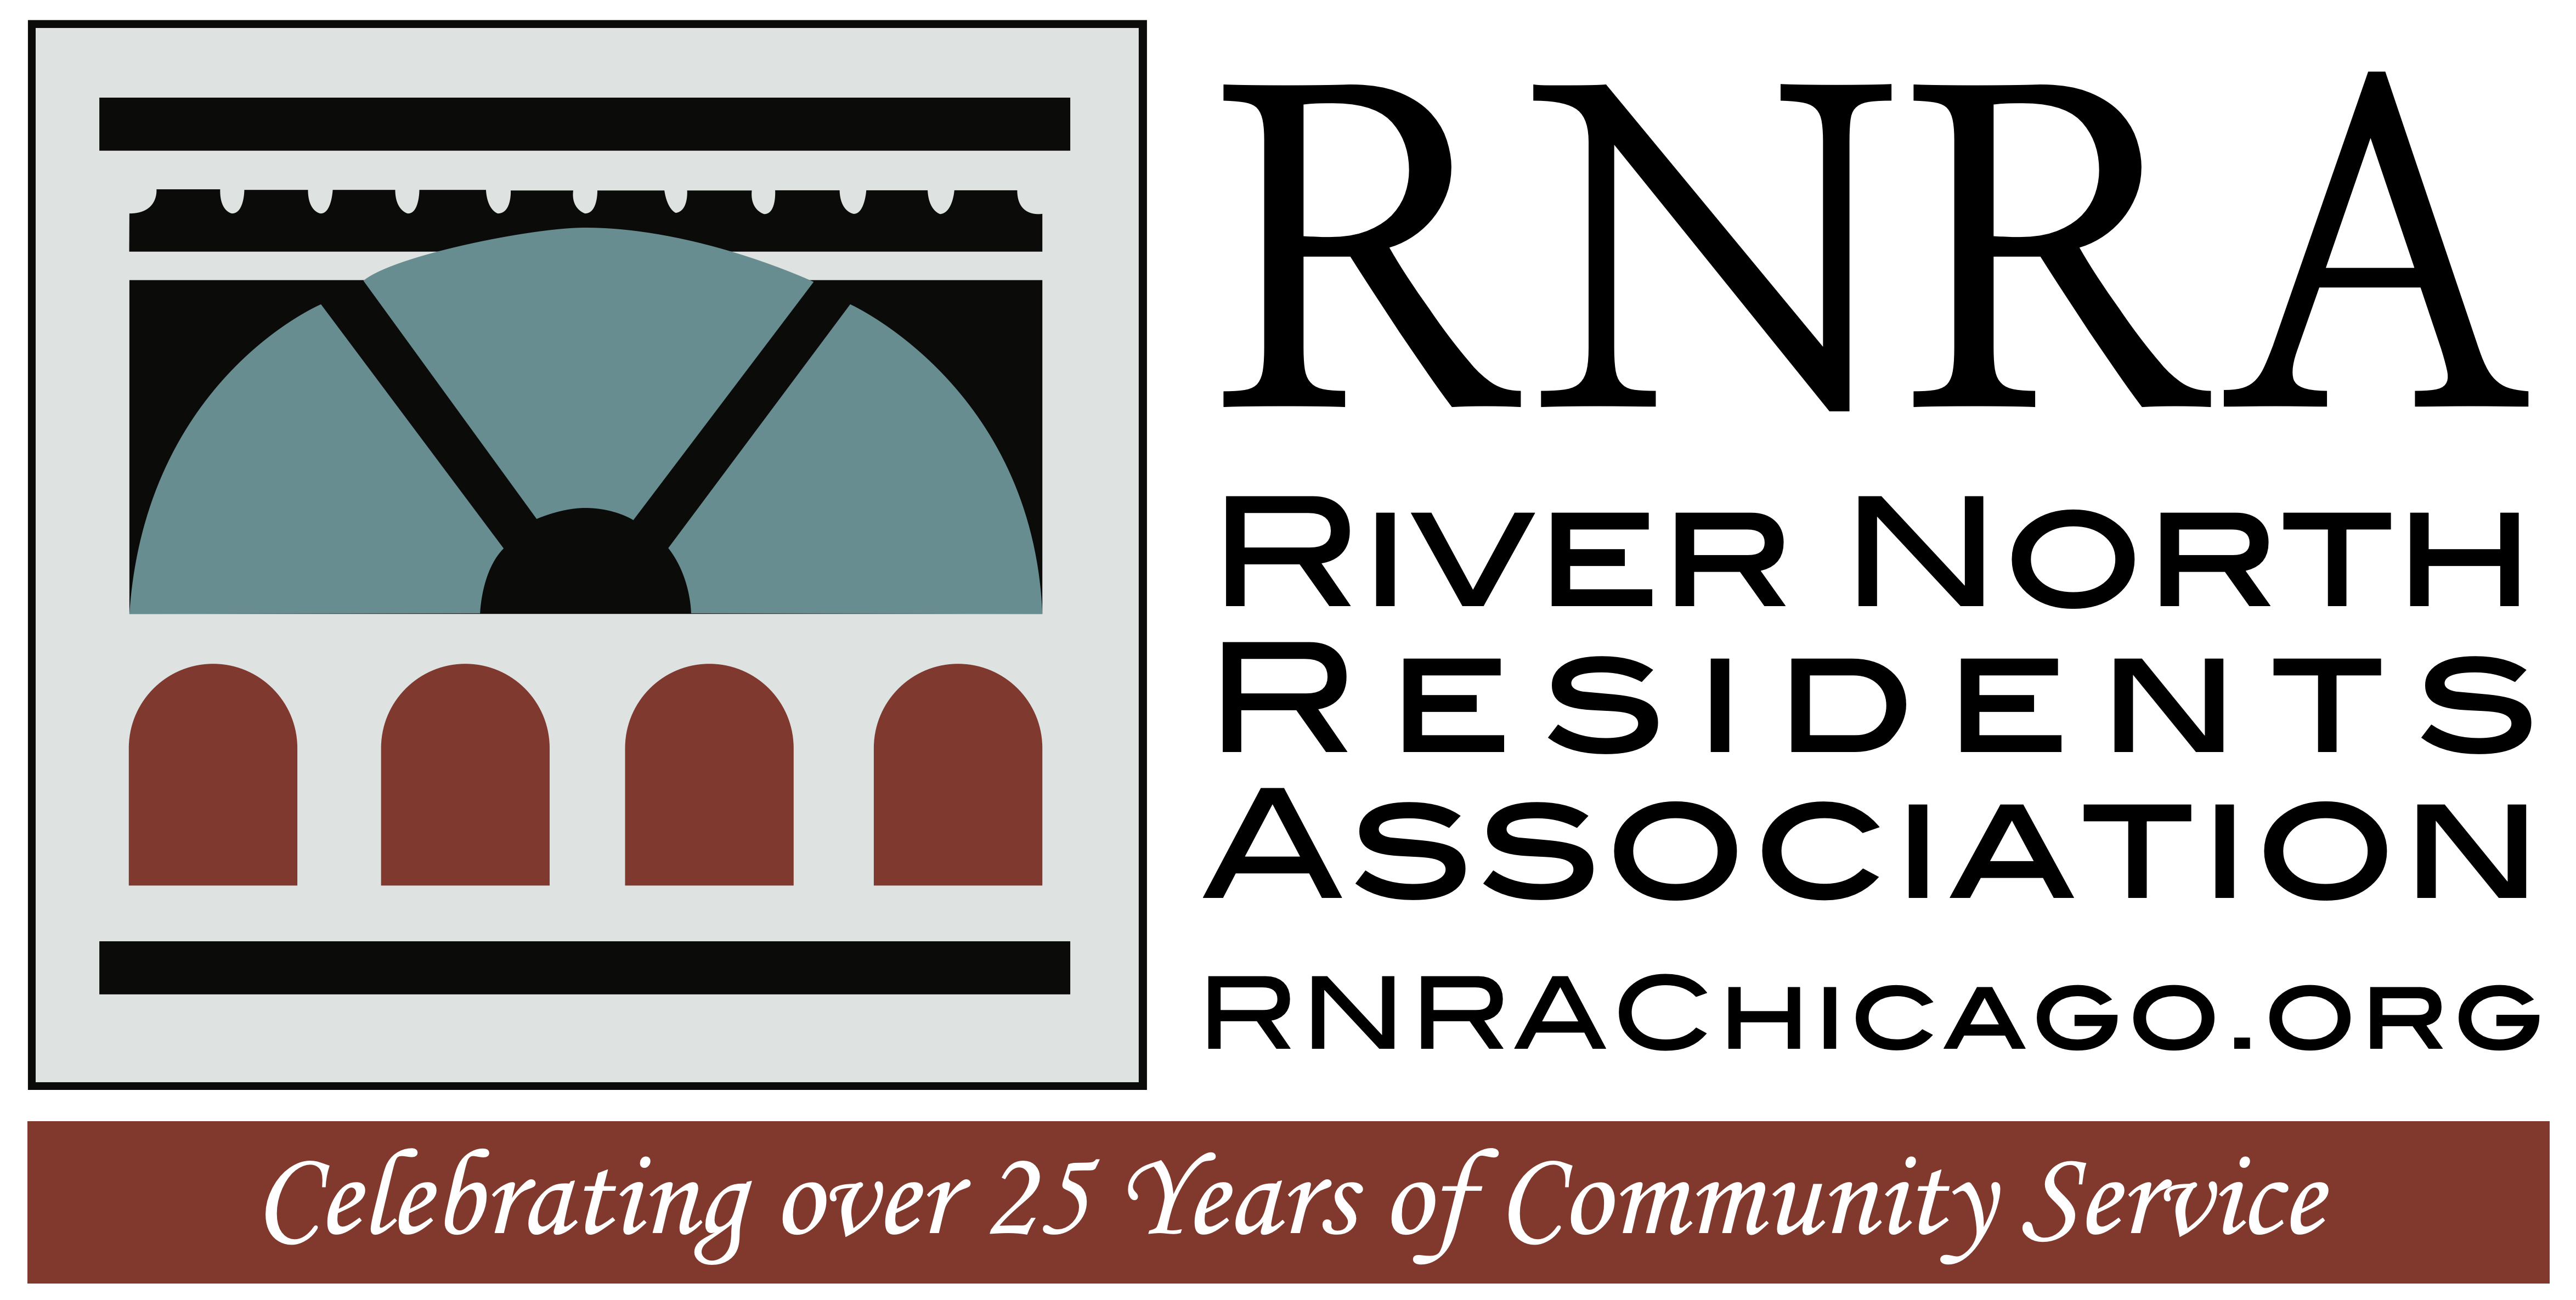 RNRA website logo